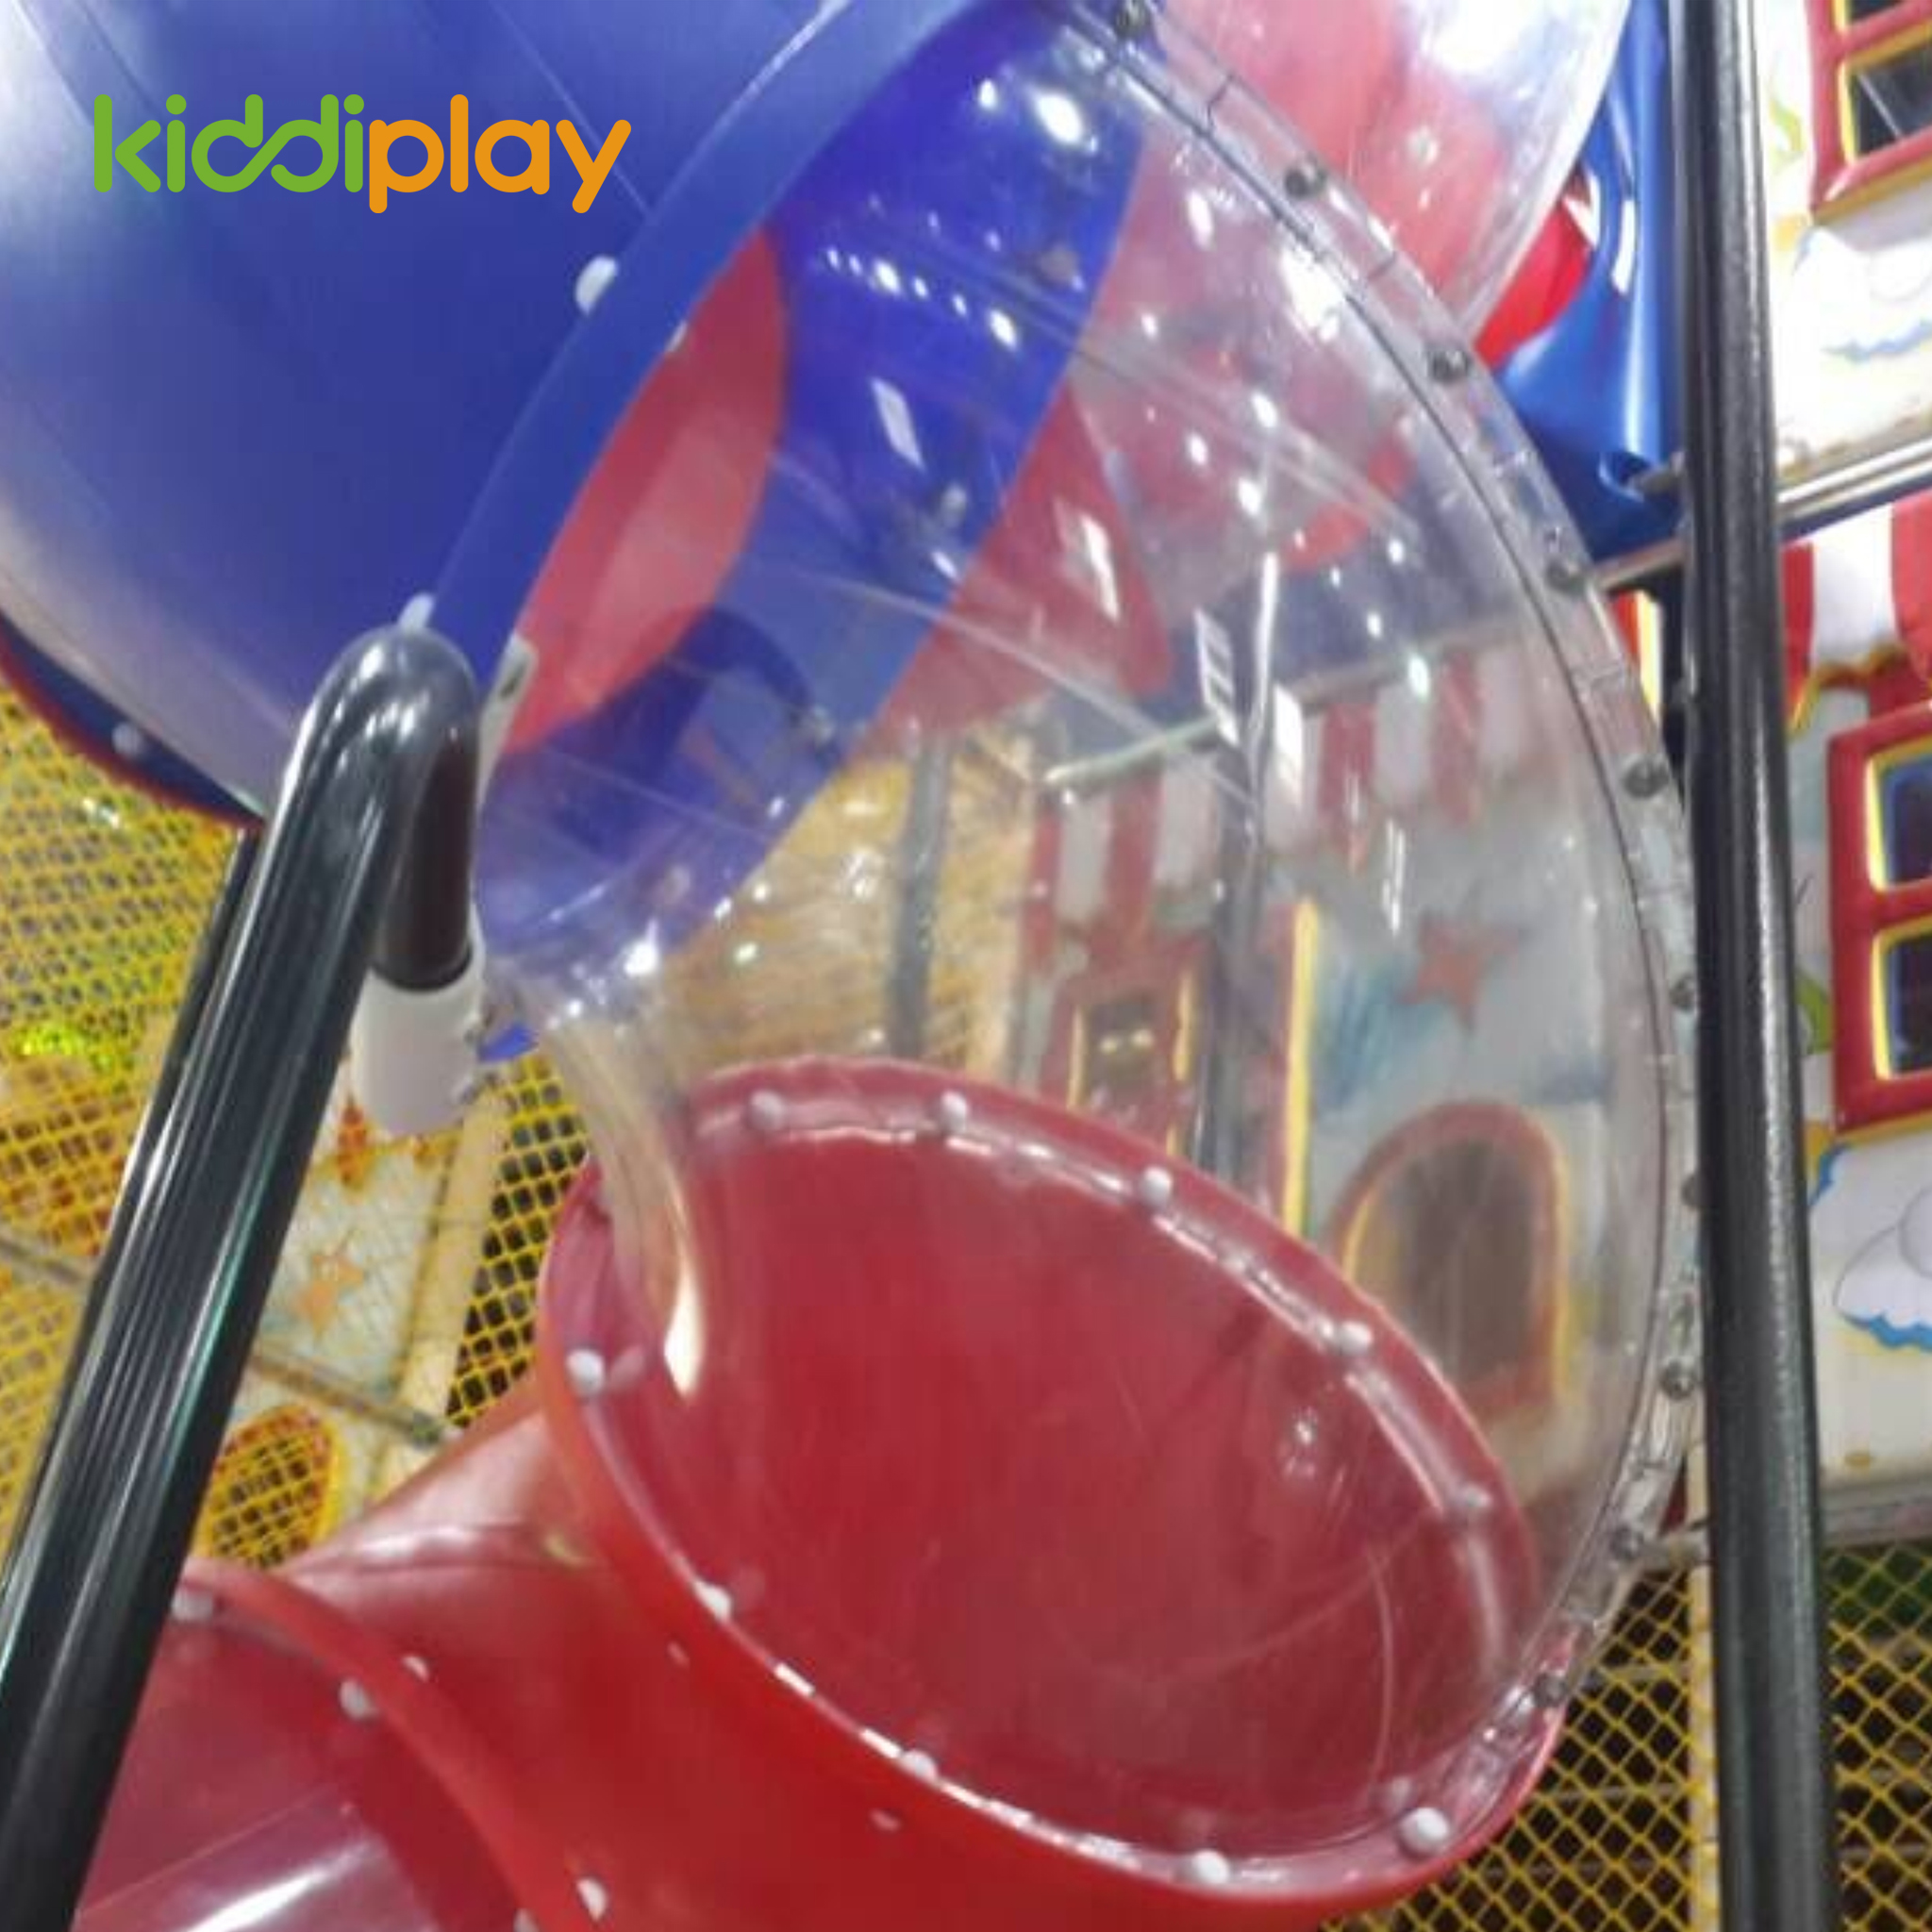 Polycarbonate Transparent Bubble for Plastic Playground